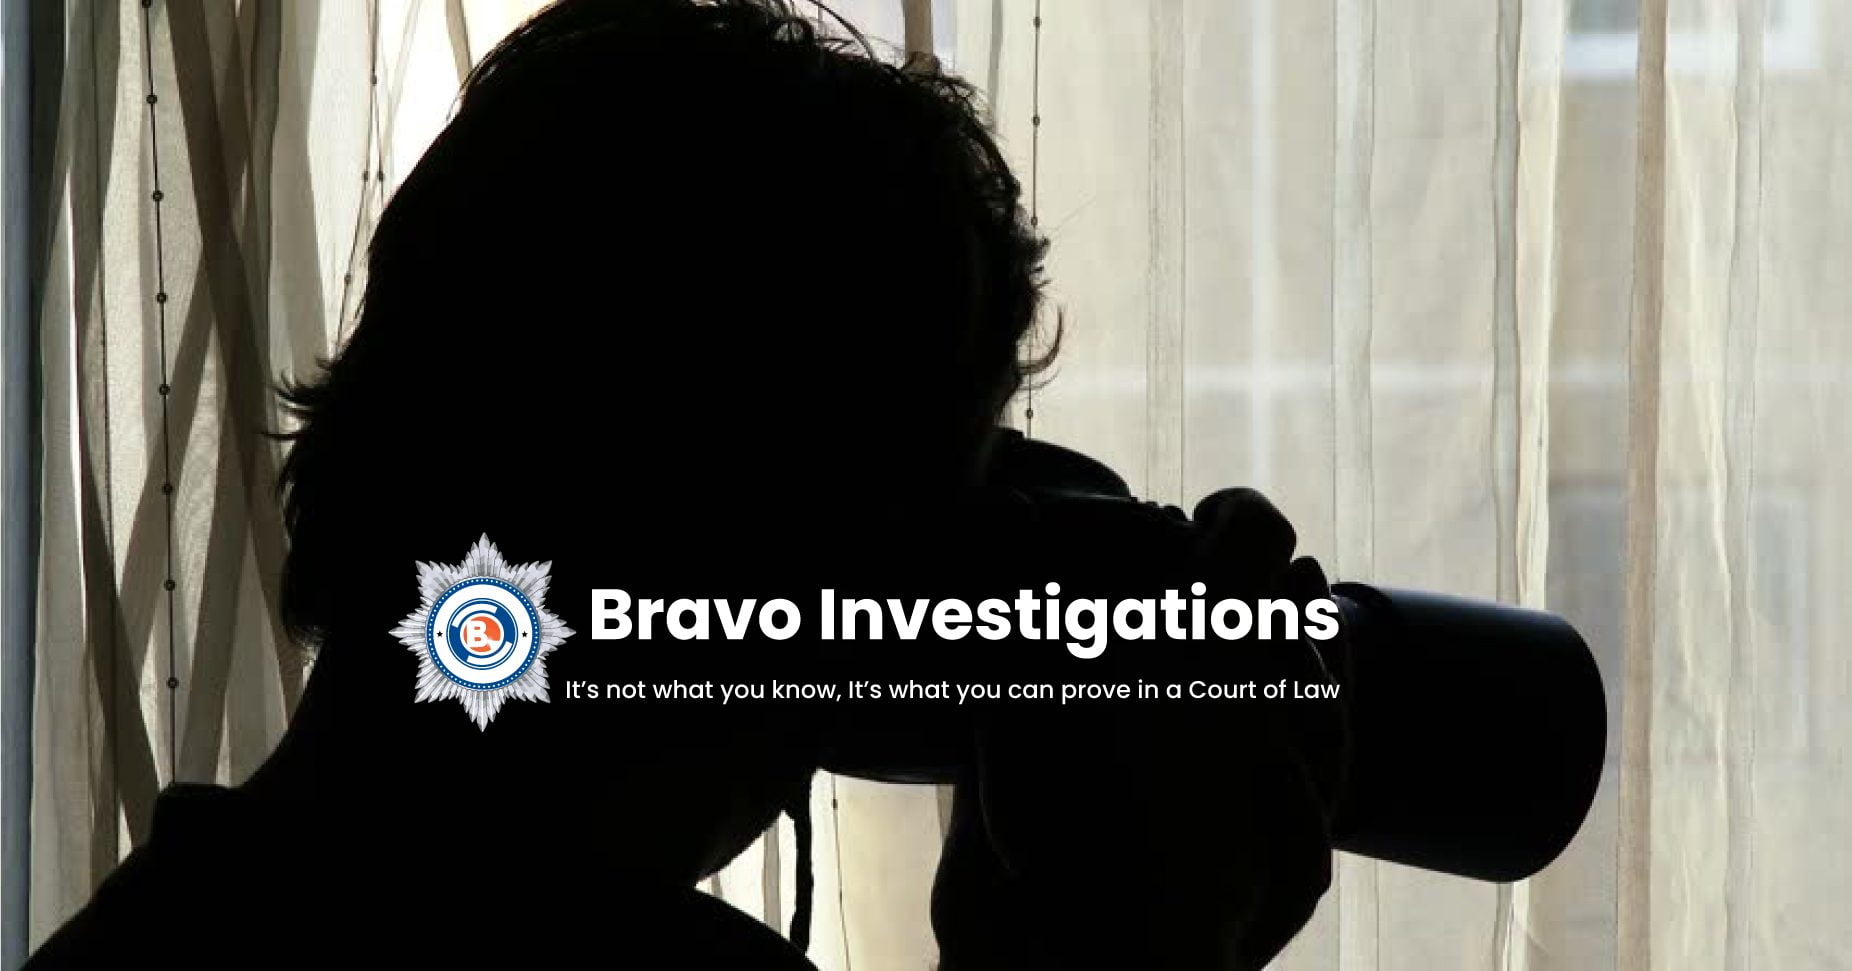 (c) Bravoinvestigations.co.uk